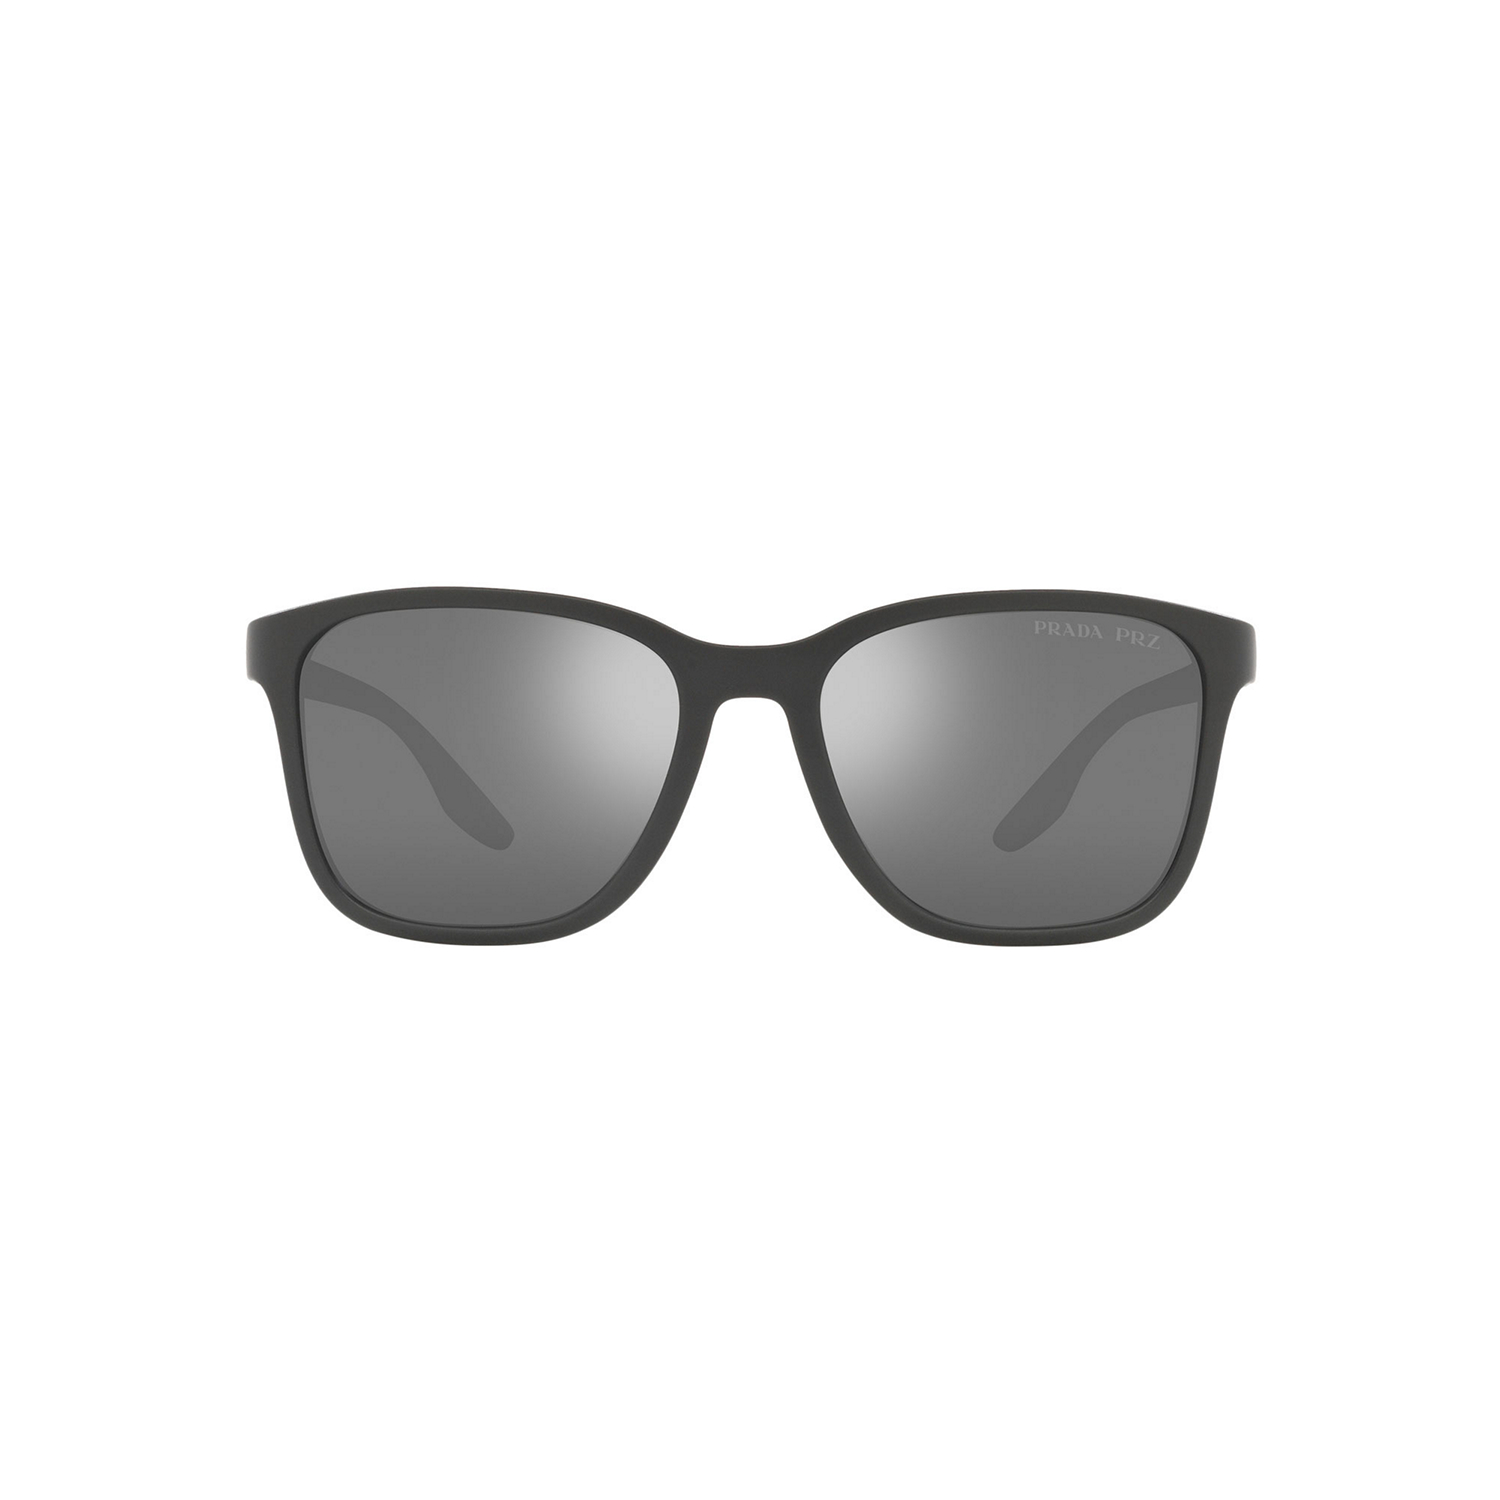 02WS Rectangle Sunglasses